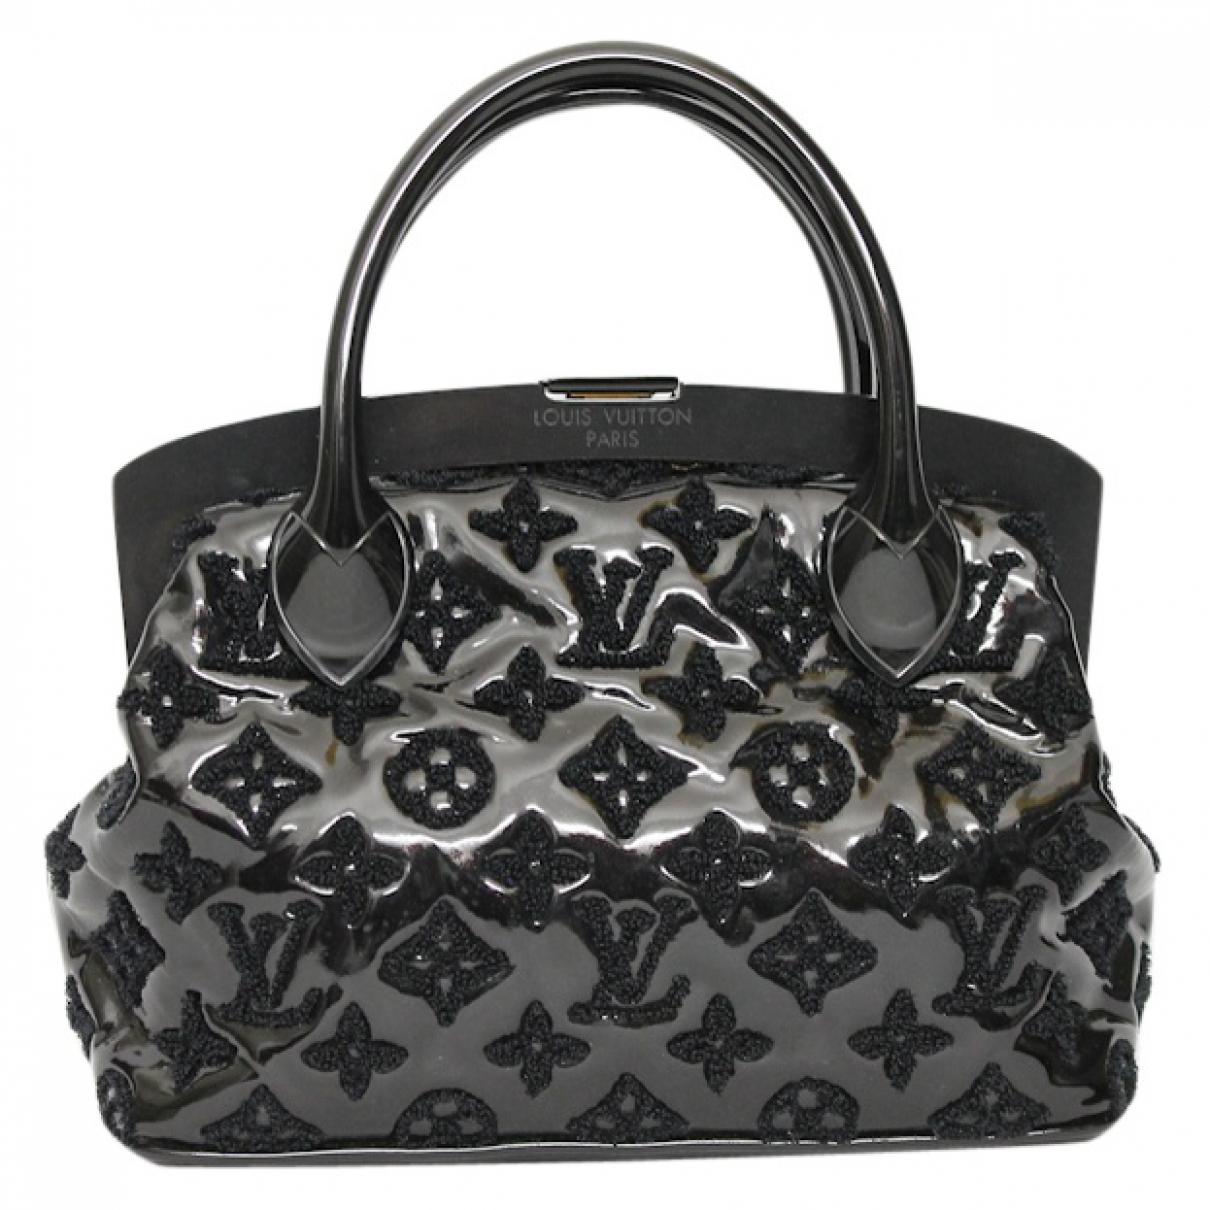 Louis Vuitton Lockit Patent Leather Handbag in Black - Lyst